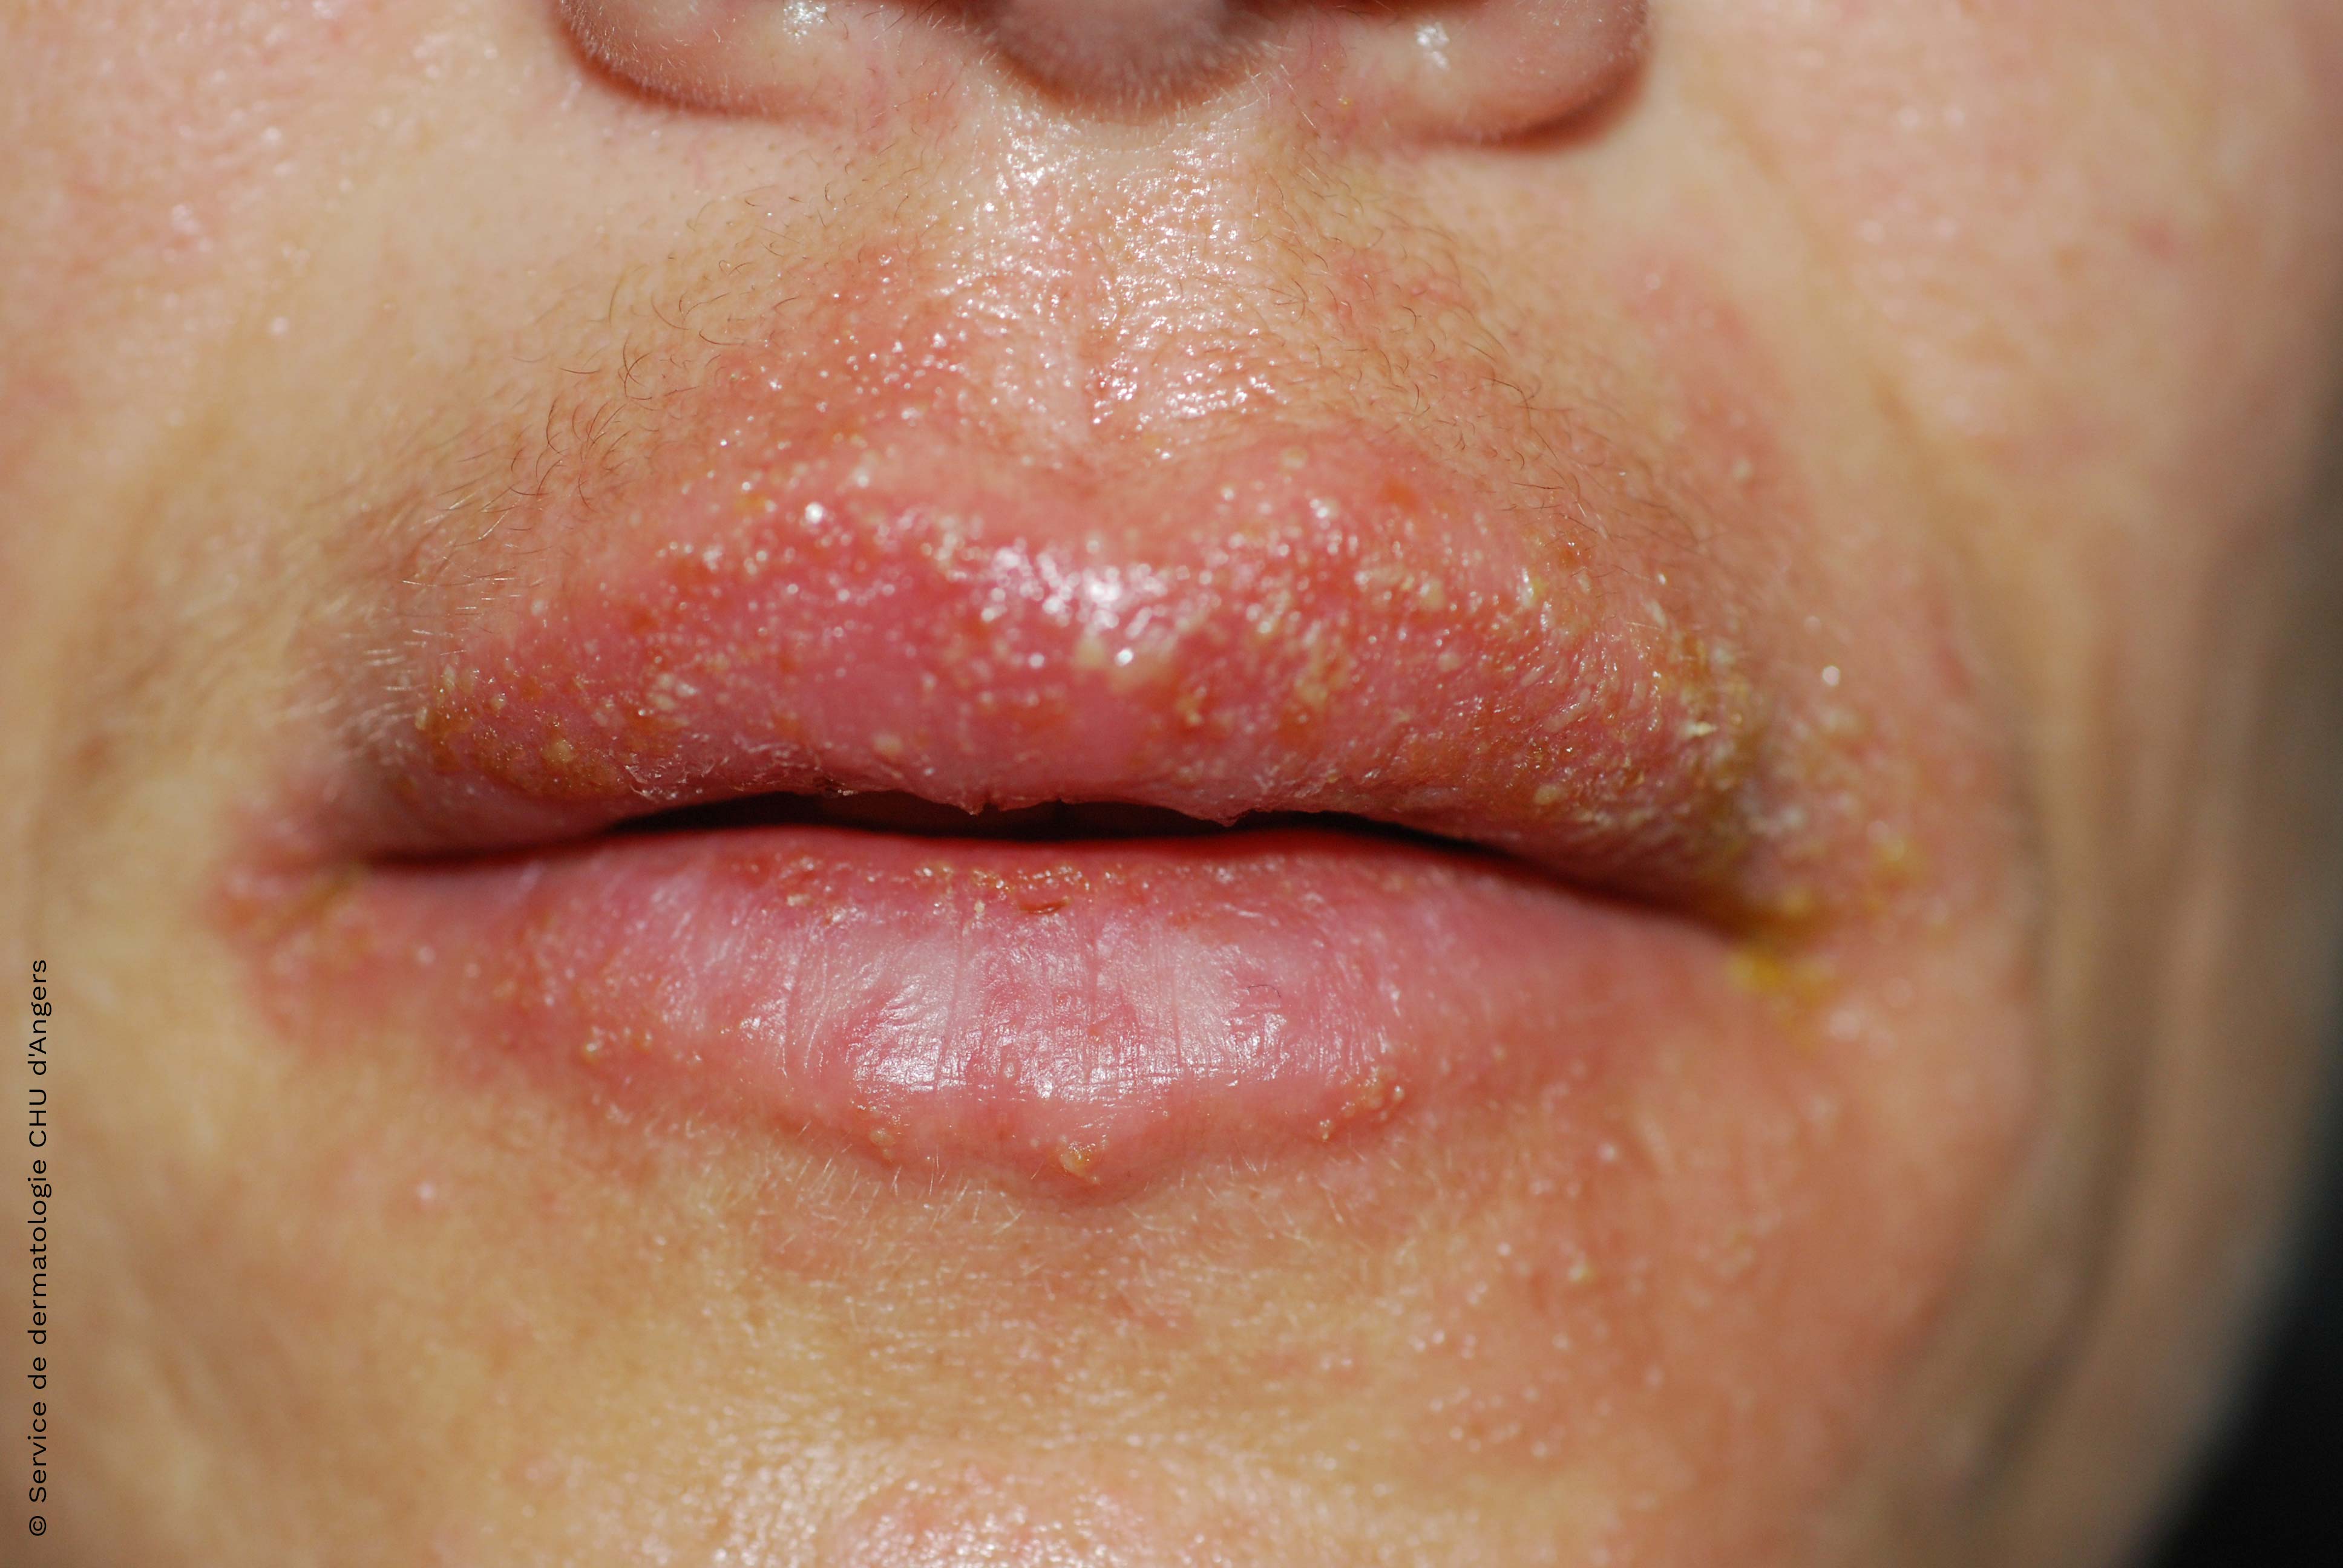 Acute lip eczema